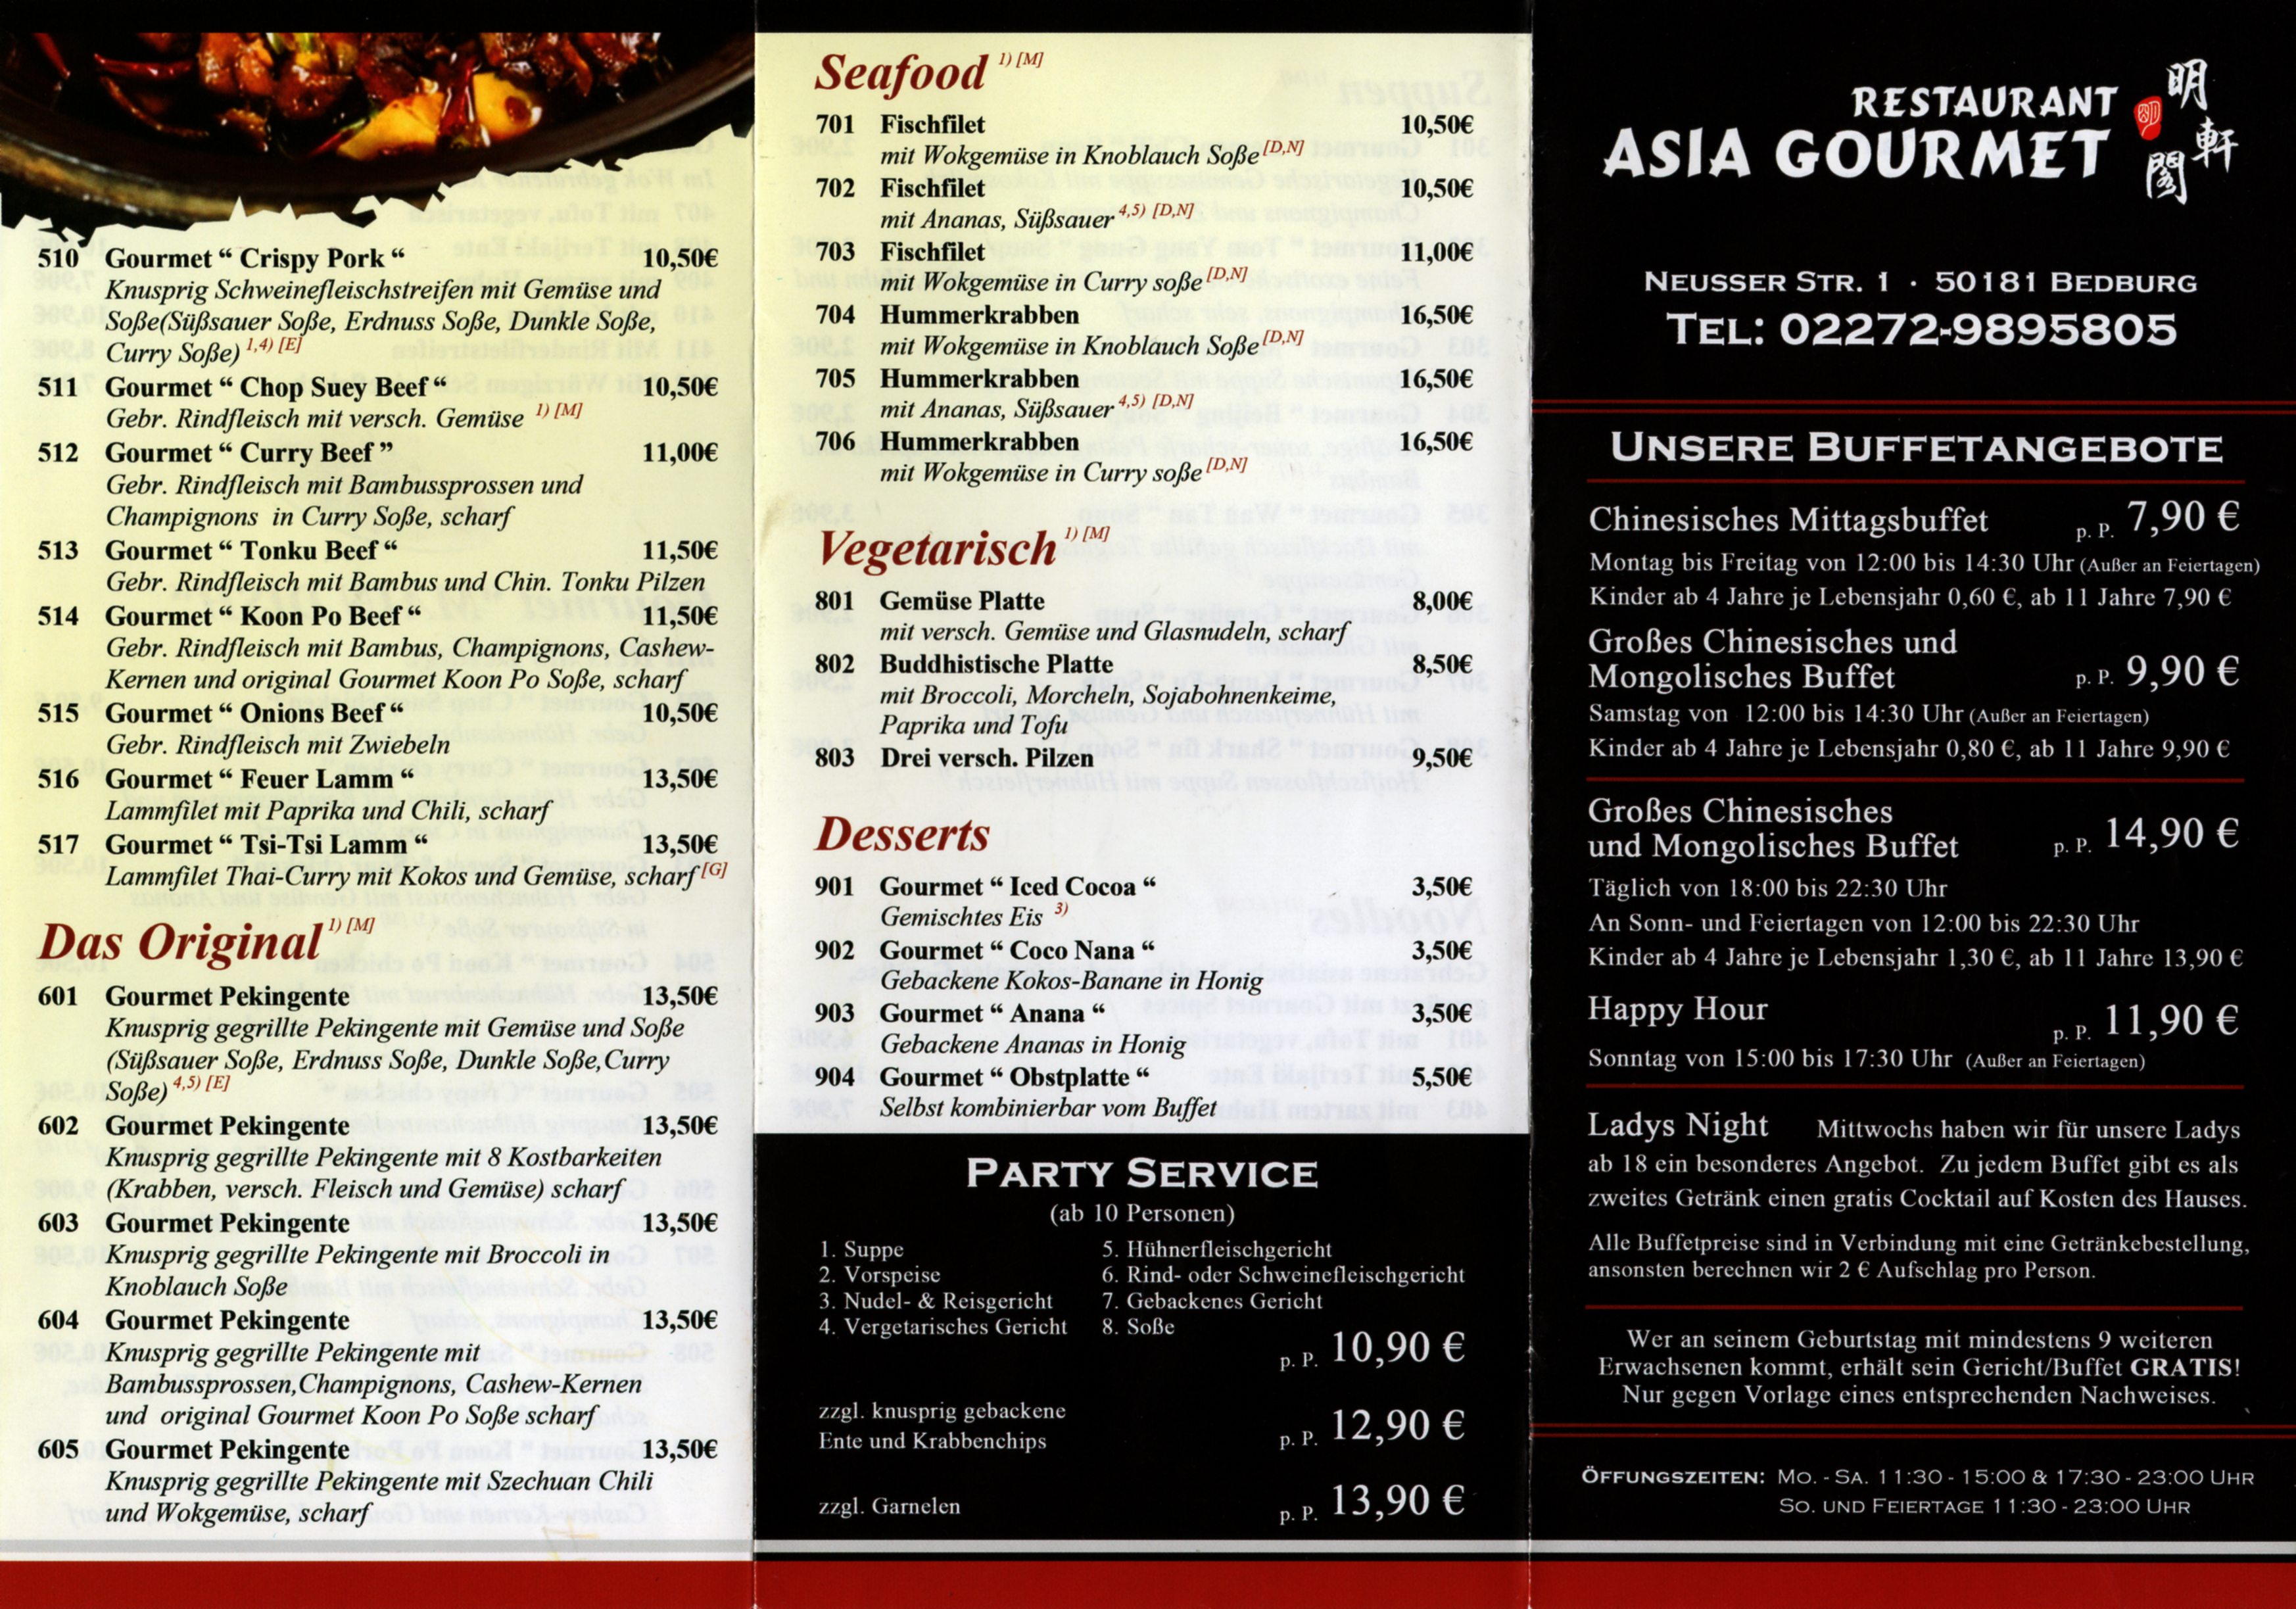 Asia Gourmet in 50181 Bedburg